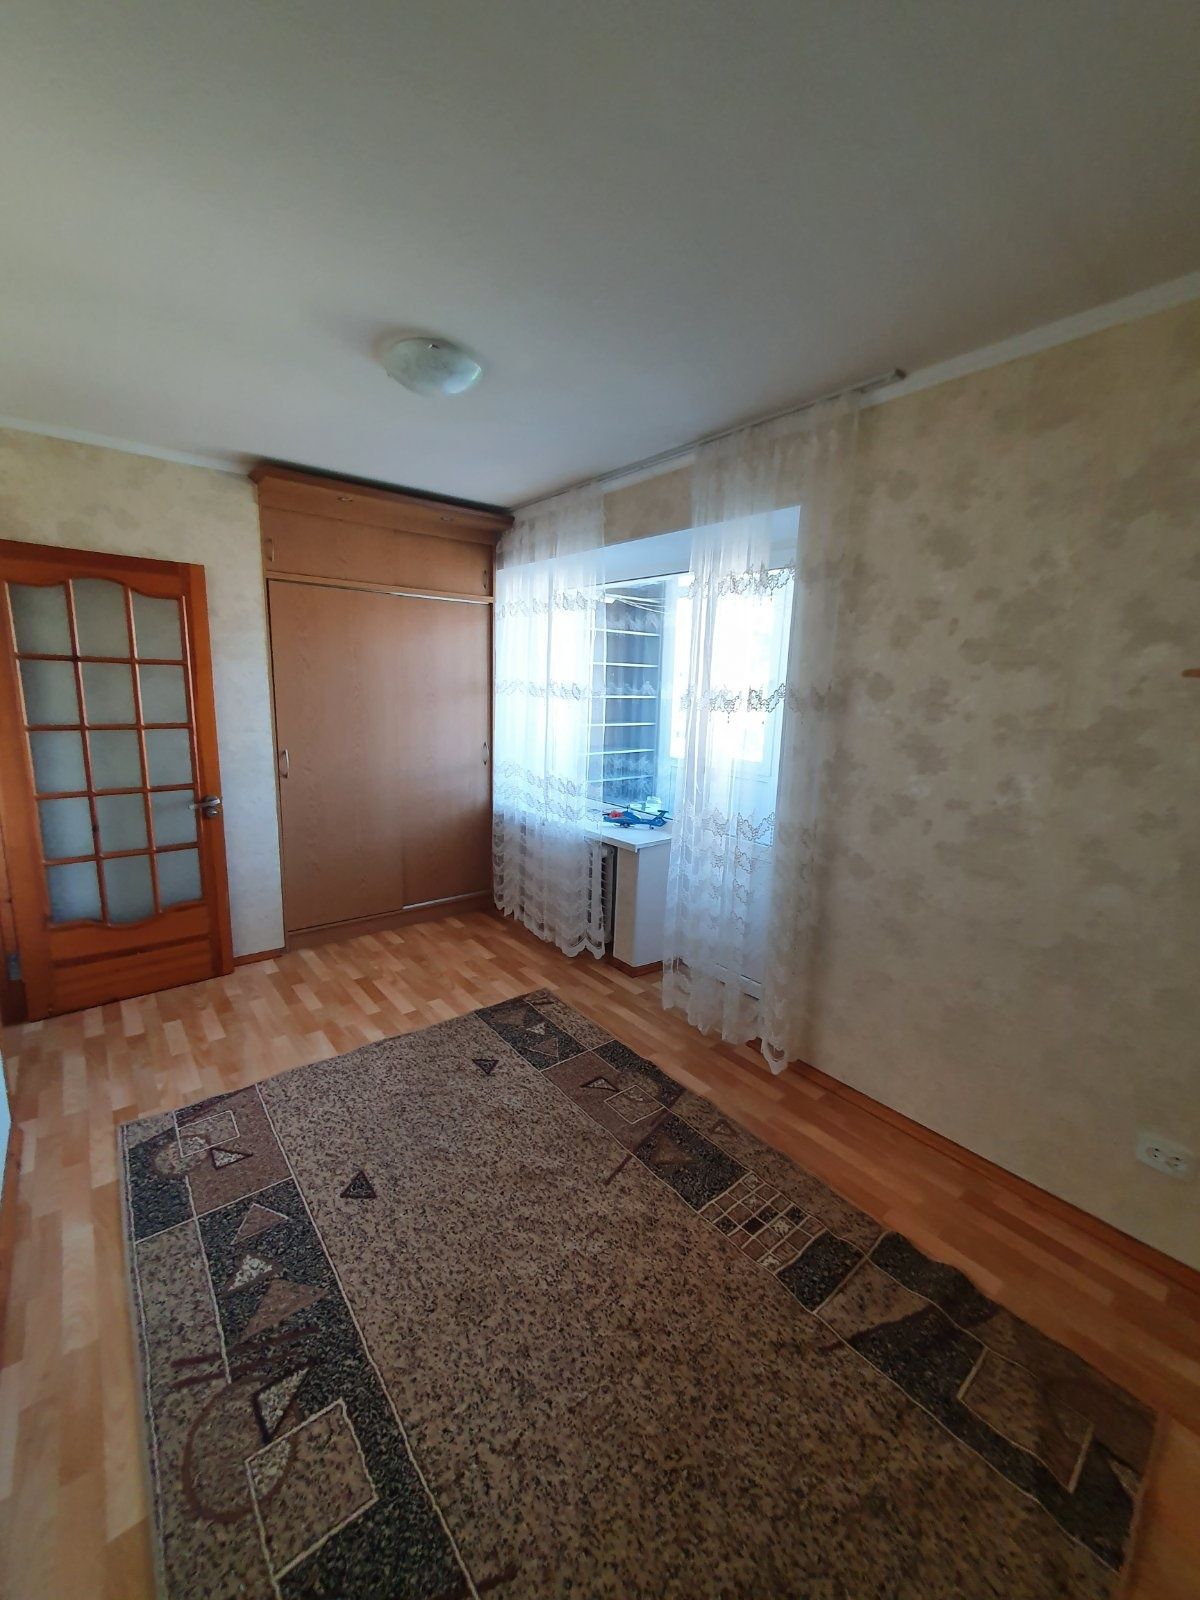 Продам 2х комнатную квартиру на Васляева